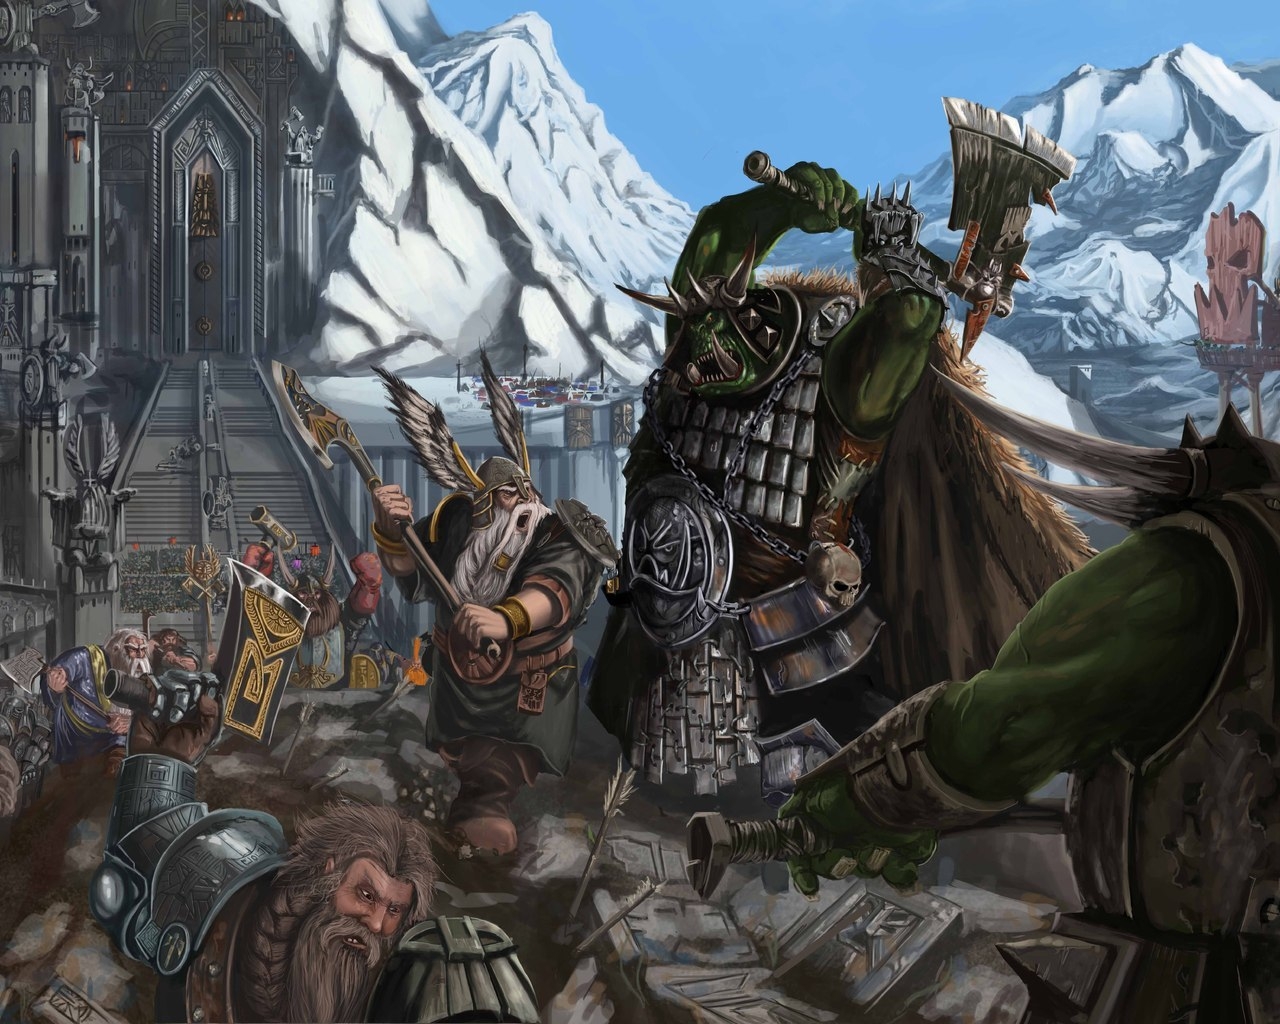 Warhammer Fantasy Battles for 1280 x 1024 resolution